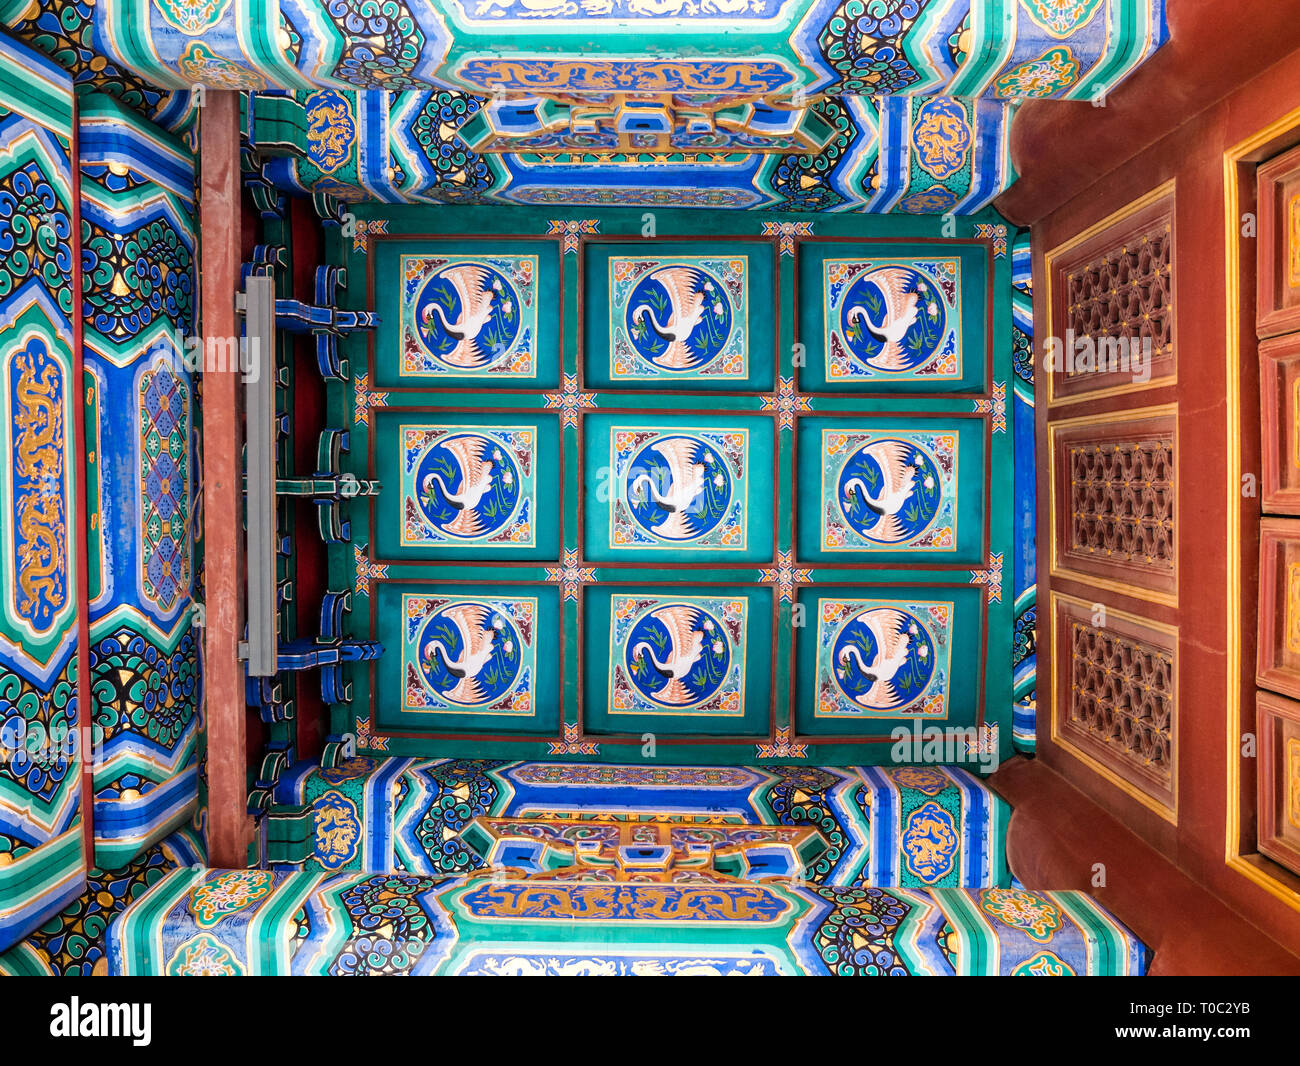 Traditionelle Chinesische Pavillon ornament Mosaiken mit Schwänen, Jingshan Park, Peking, China Stockfoto